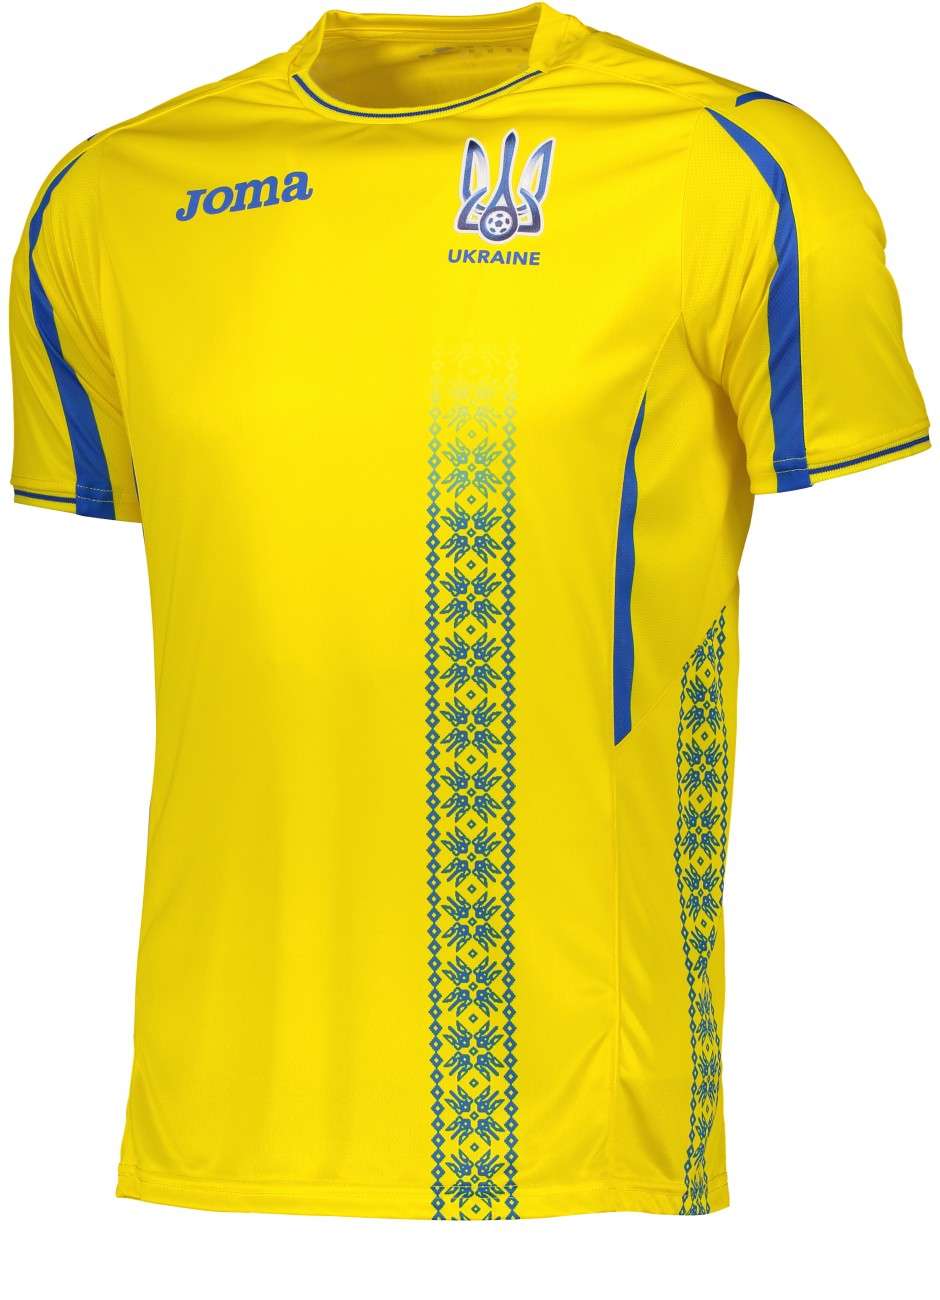 joma-camisetas-futbol-ucrania-primera-equipcacion - Diffusion Sport